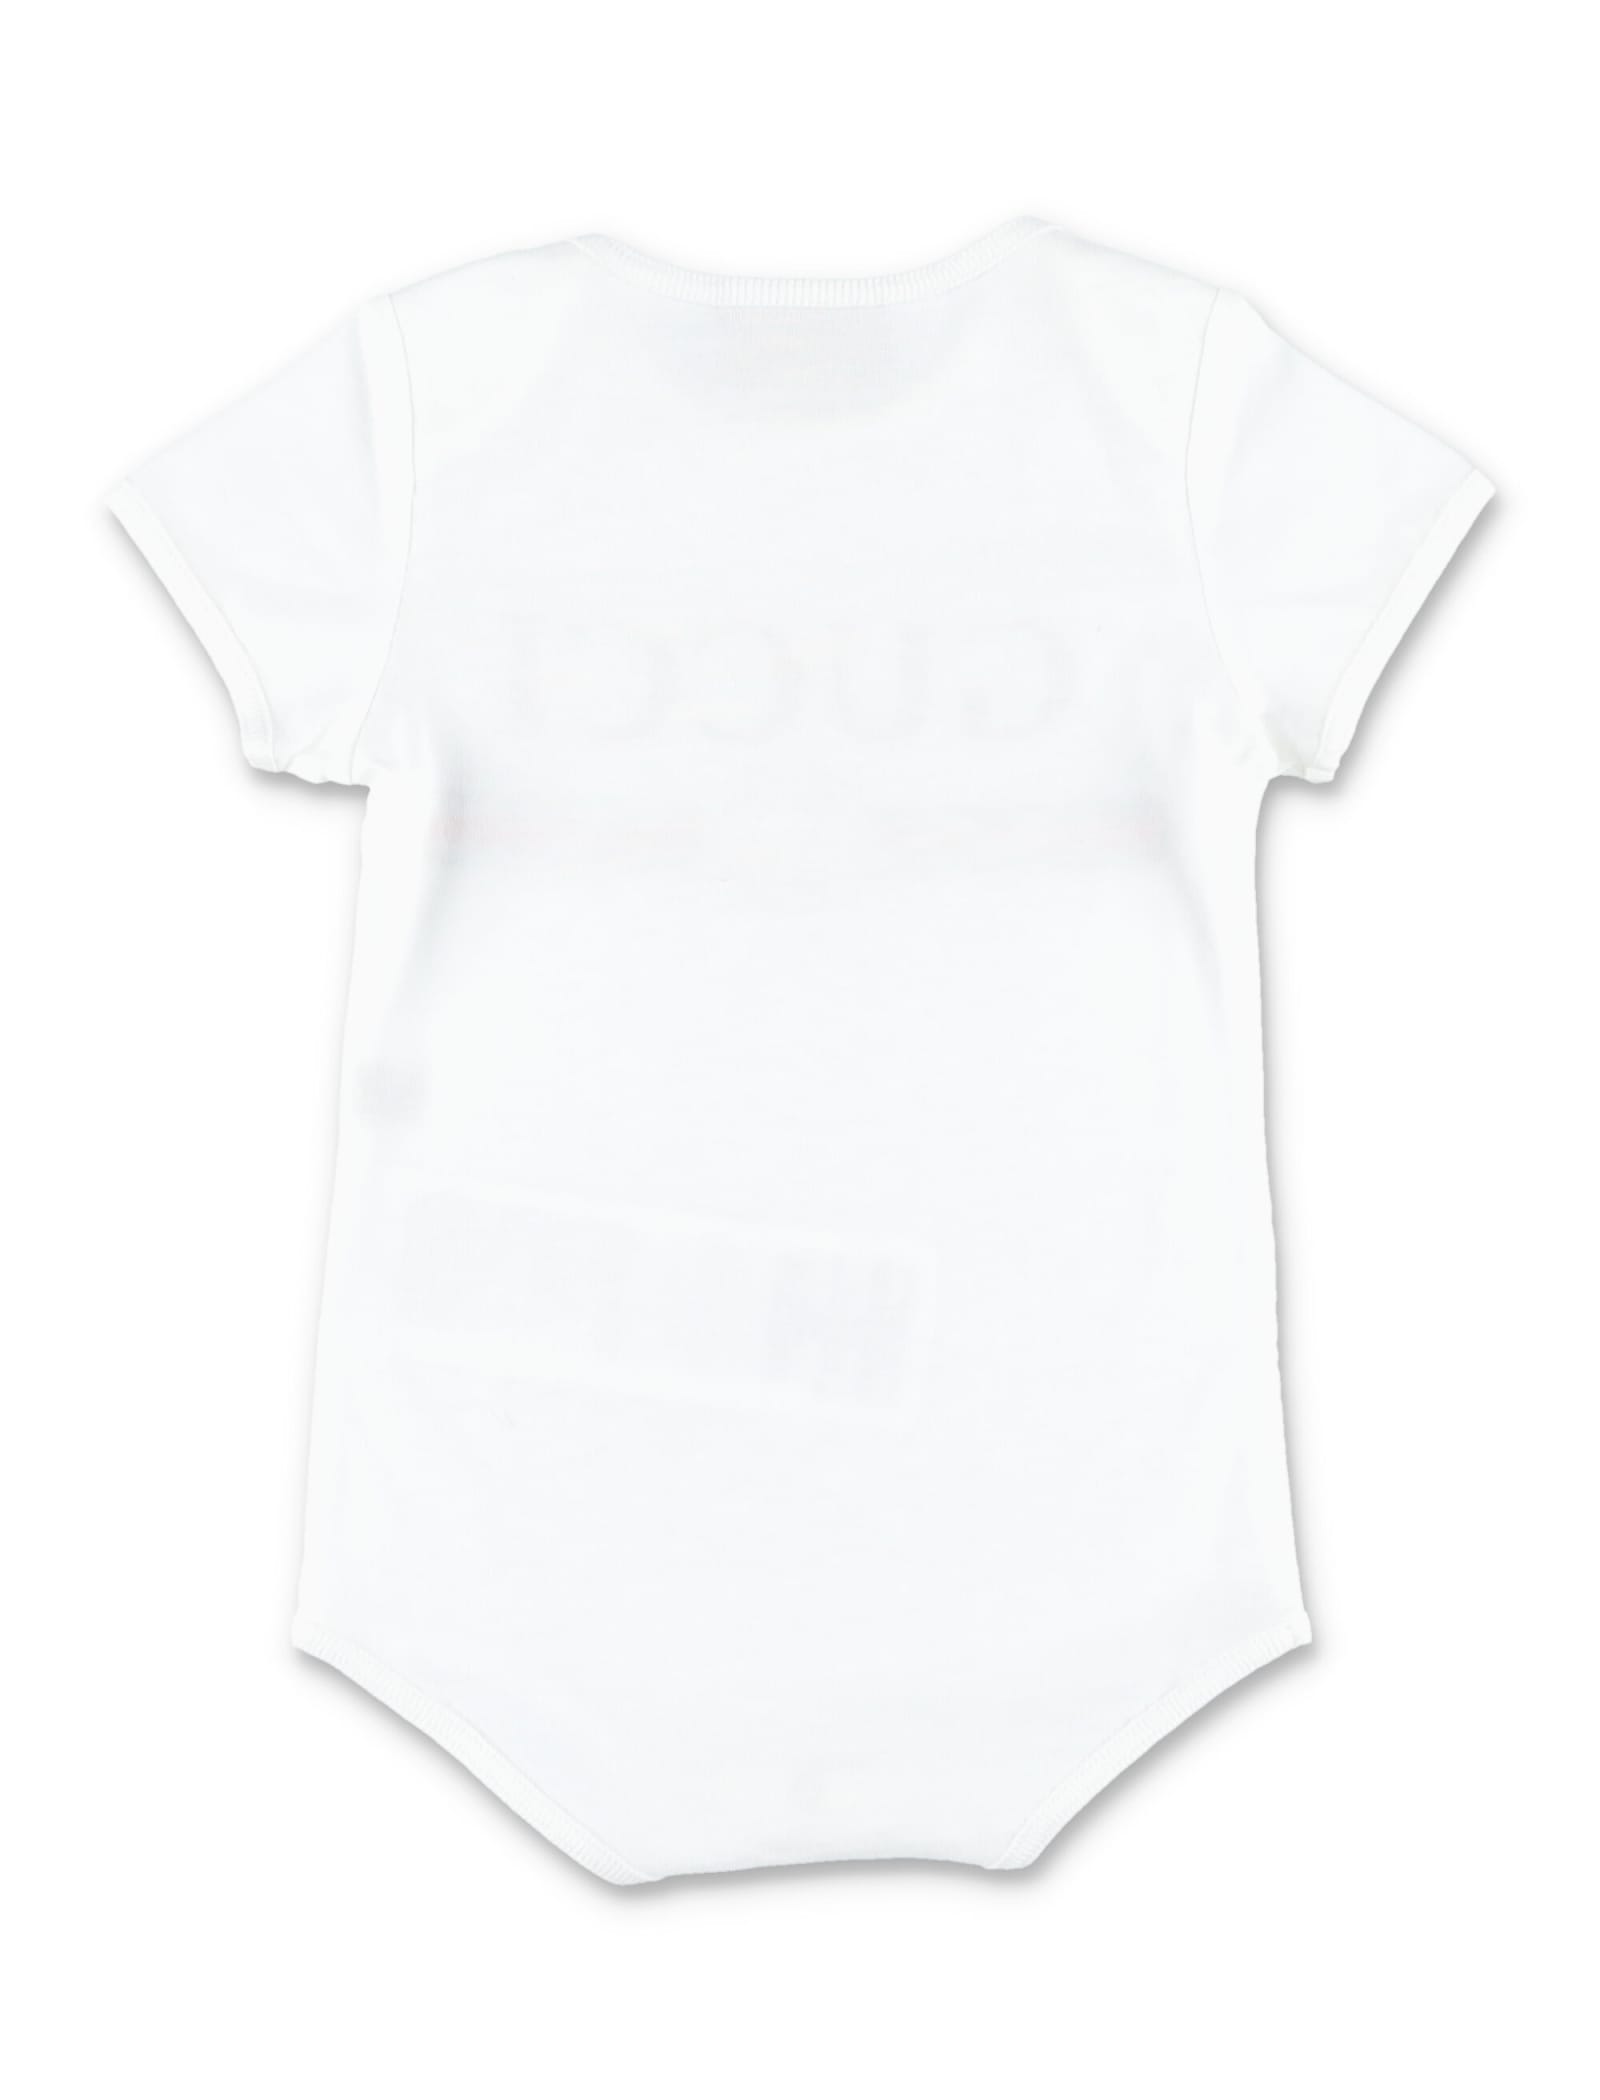 Shop Gucci Baby  Logo Cotton Gift Set